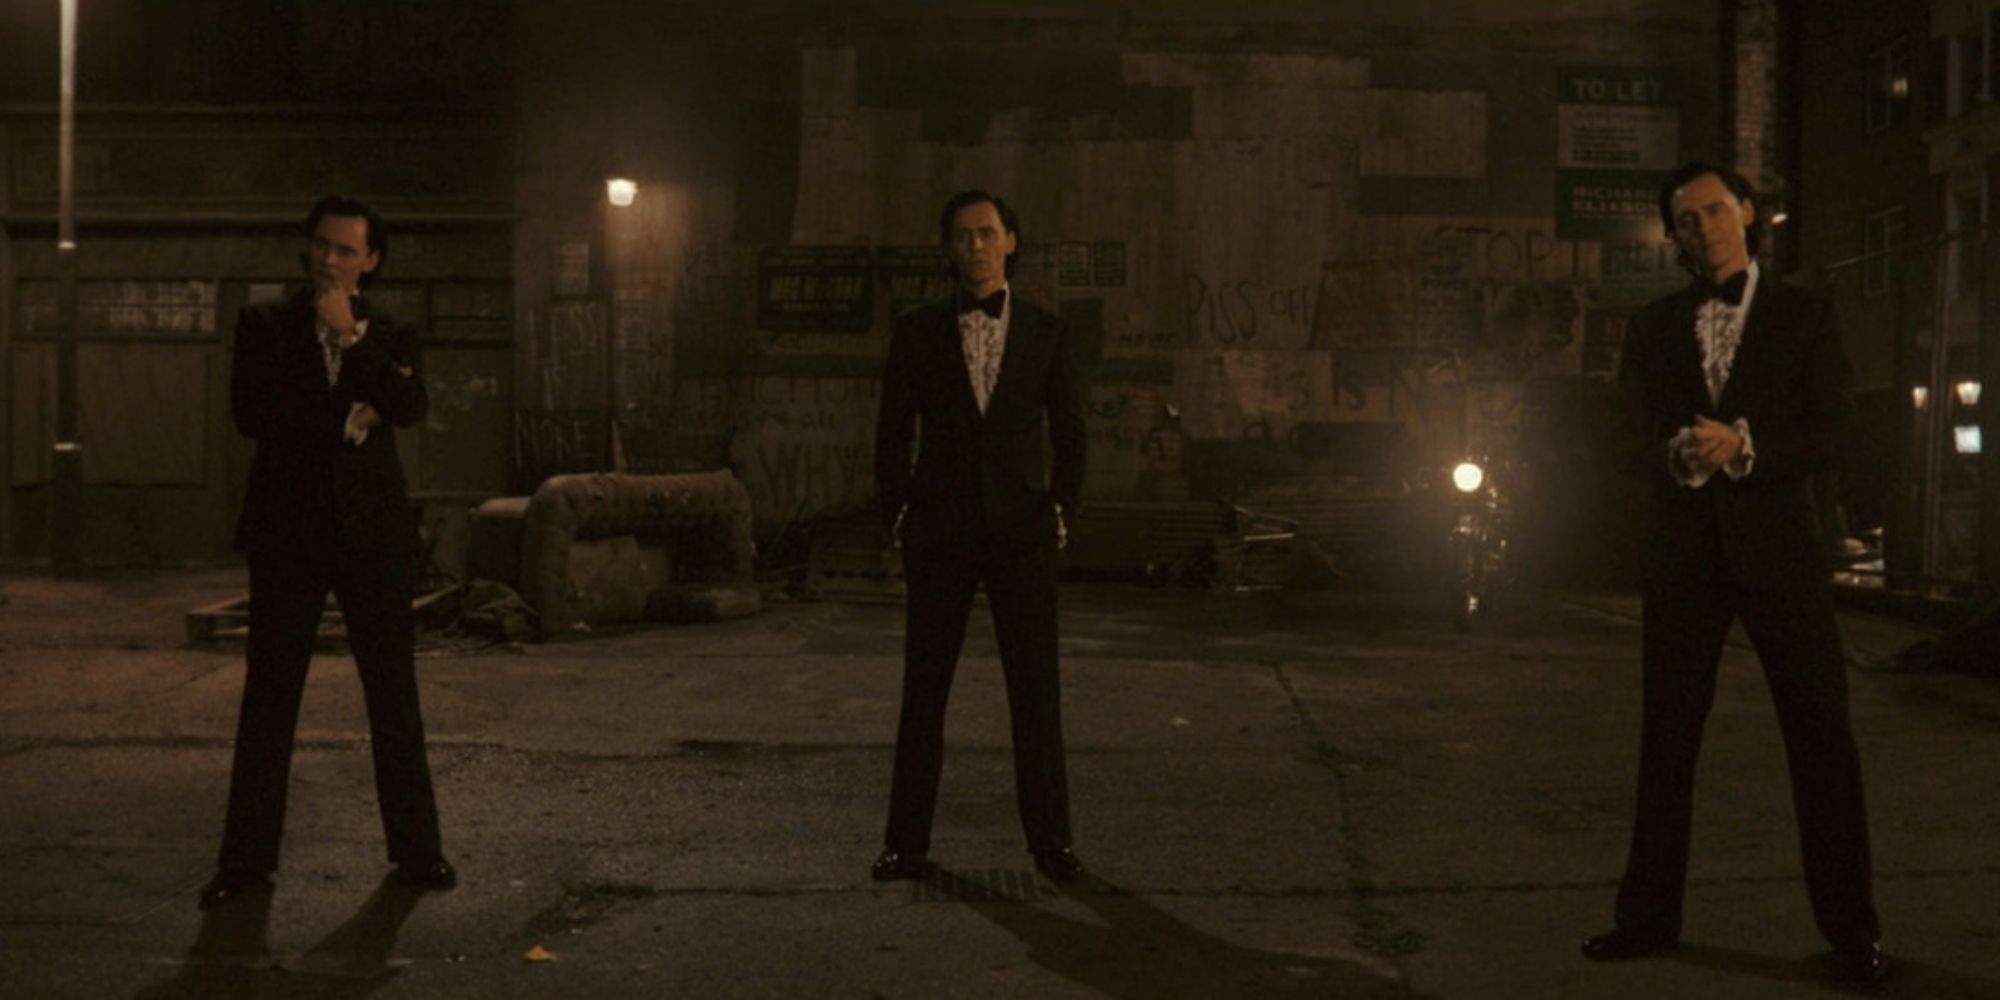 Loki making duplicates of himself in a tuxedo